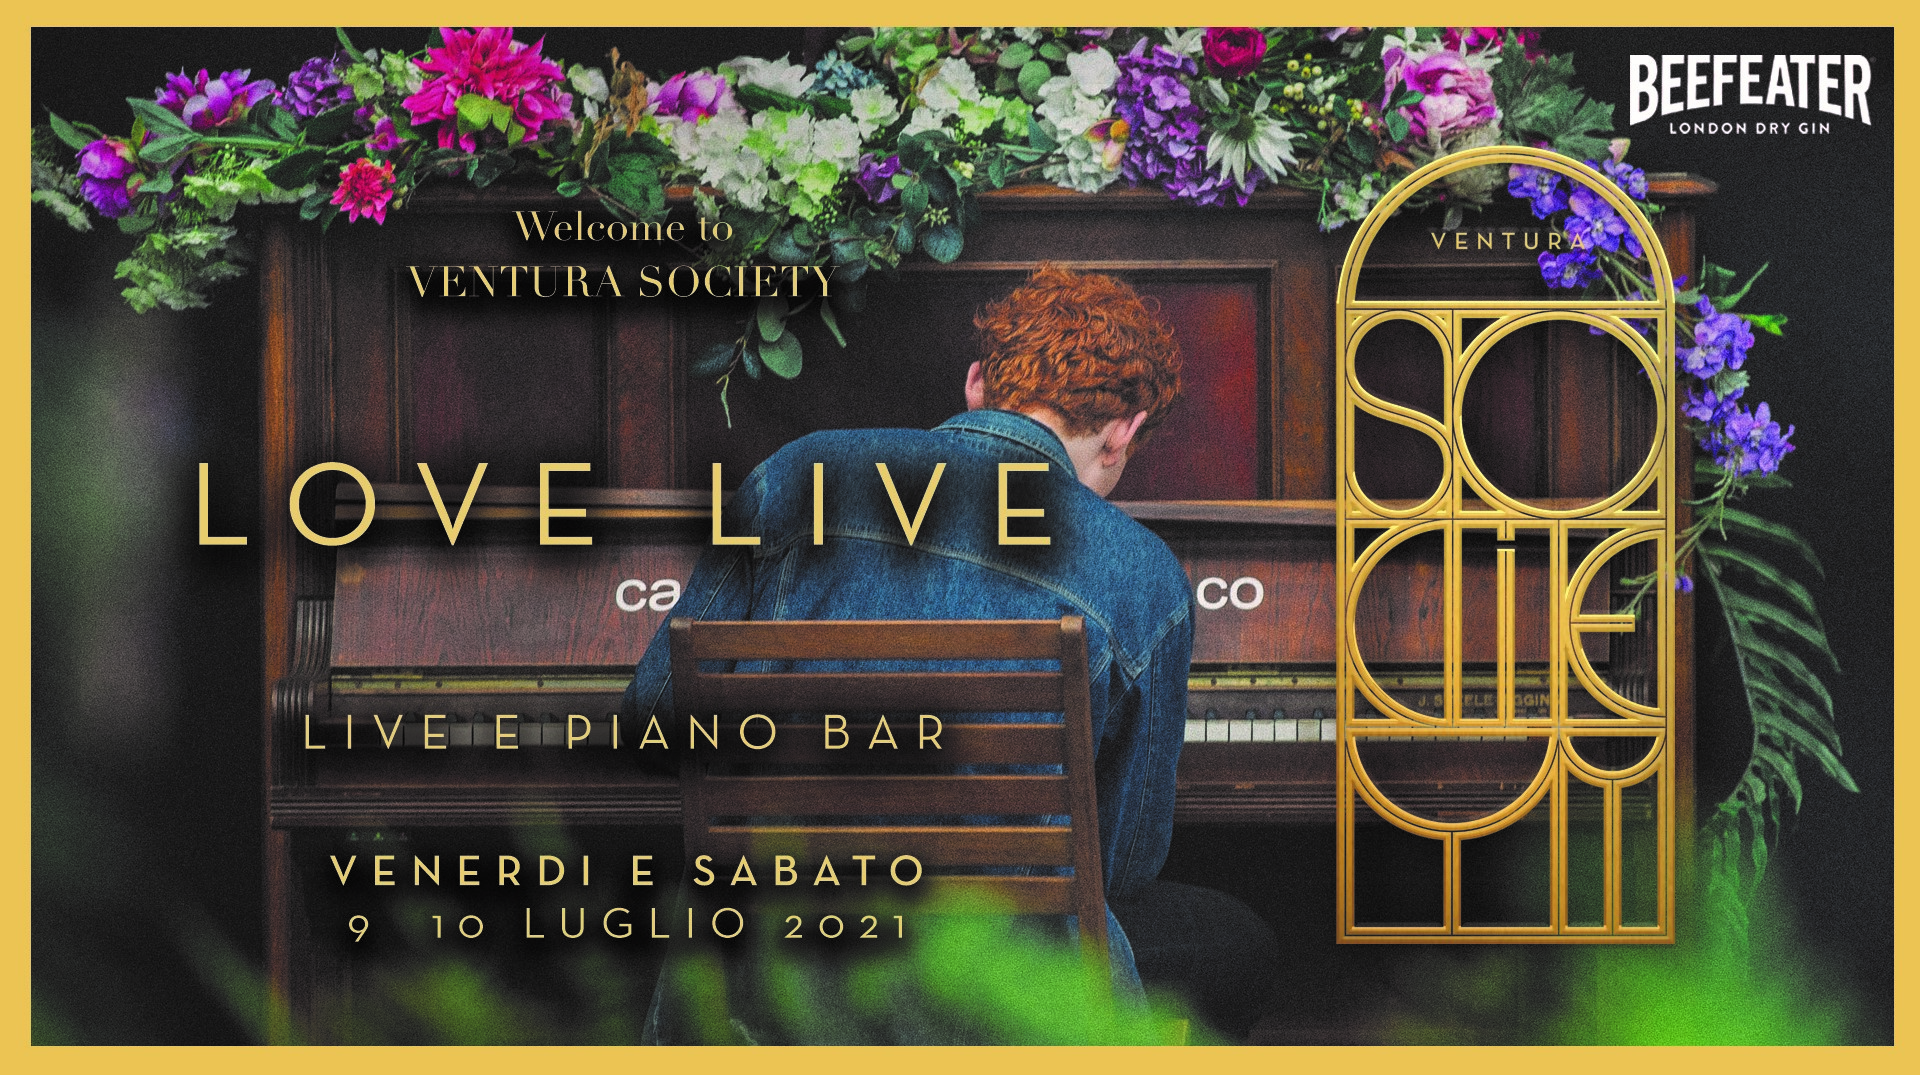 VENTURA SOCIETY ❃ Welcome ❃ LOVE LIVE & PIANO BAR ❃ YOUparti